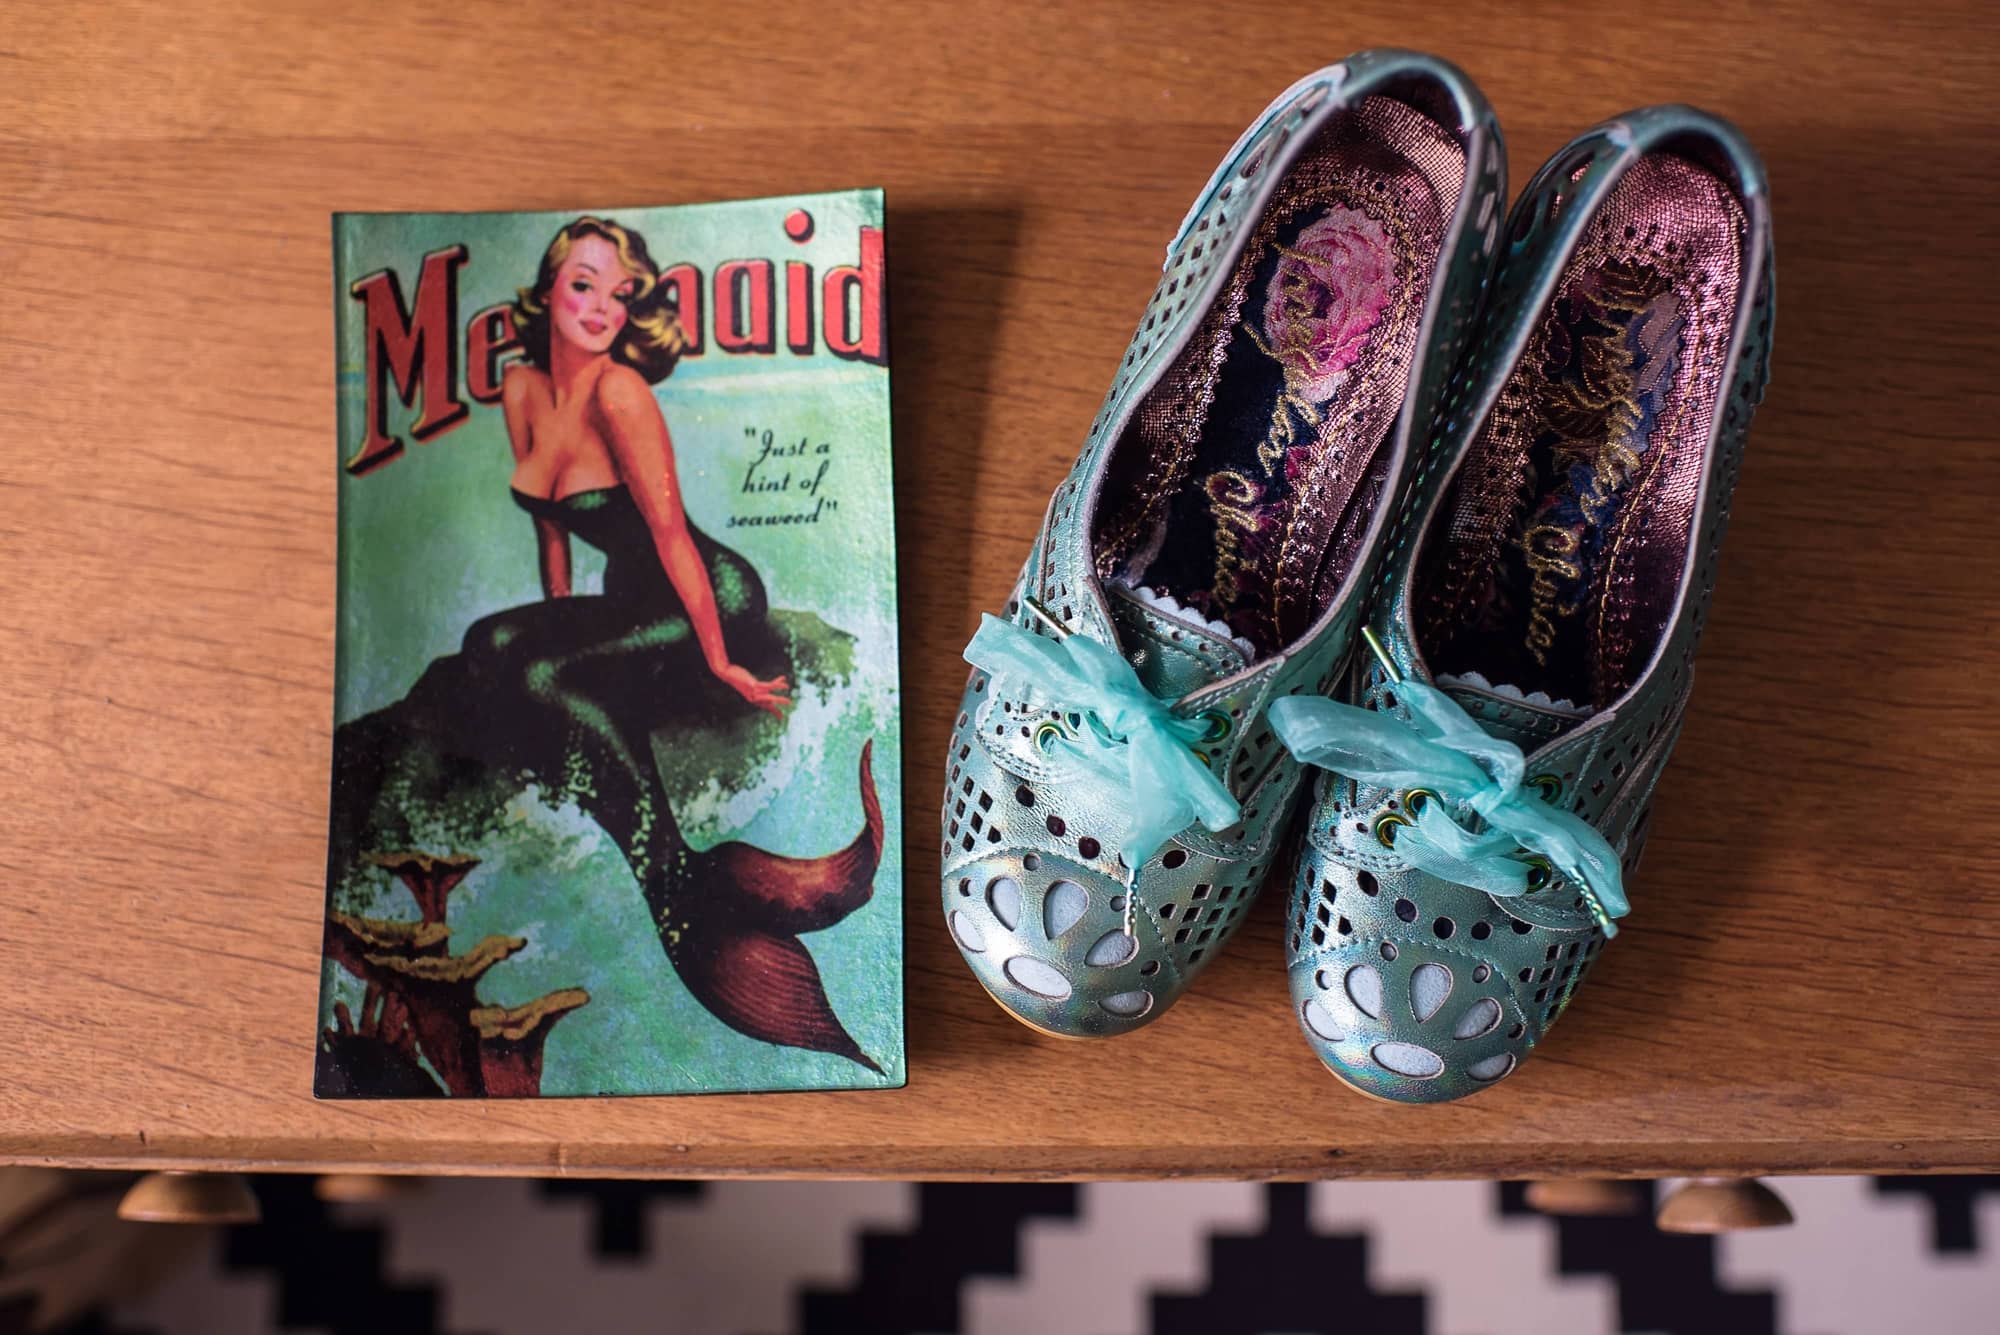 turquoise irregular choice wedding shoes and mermaid book